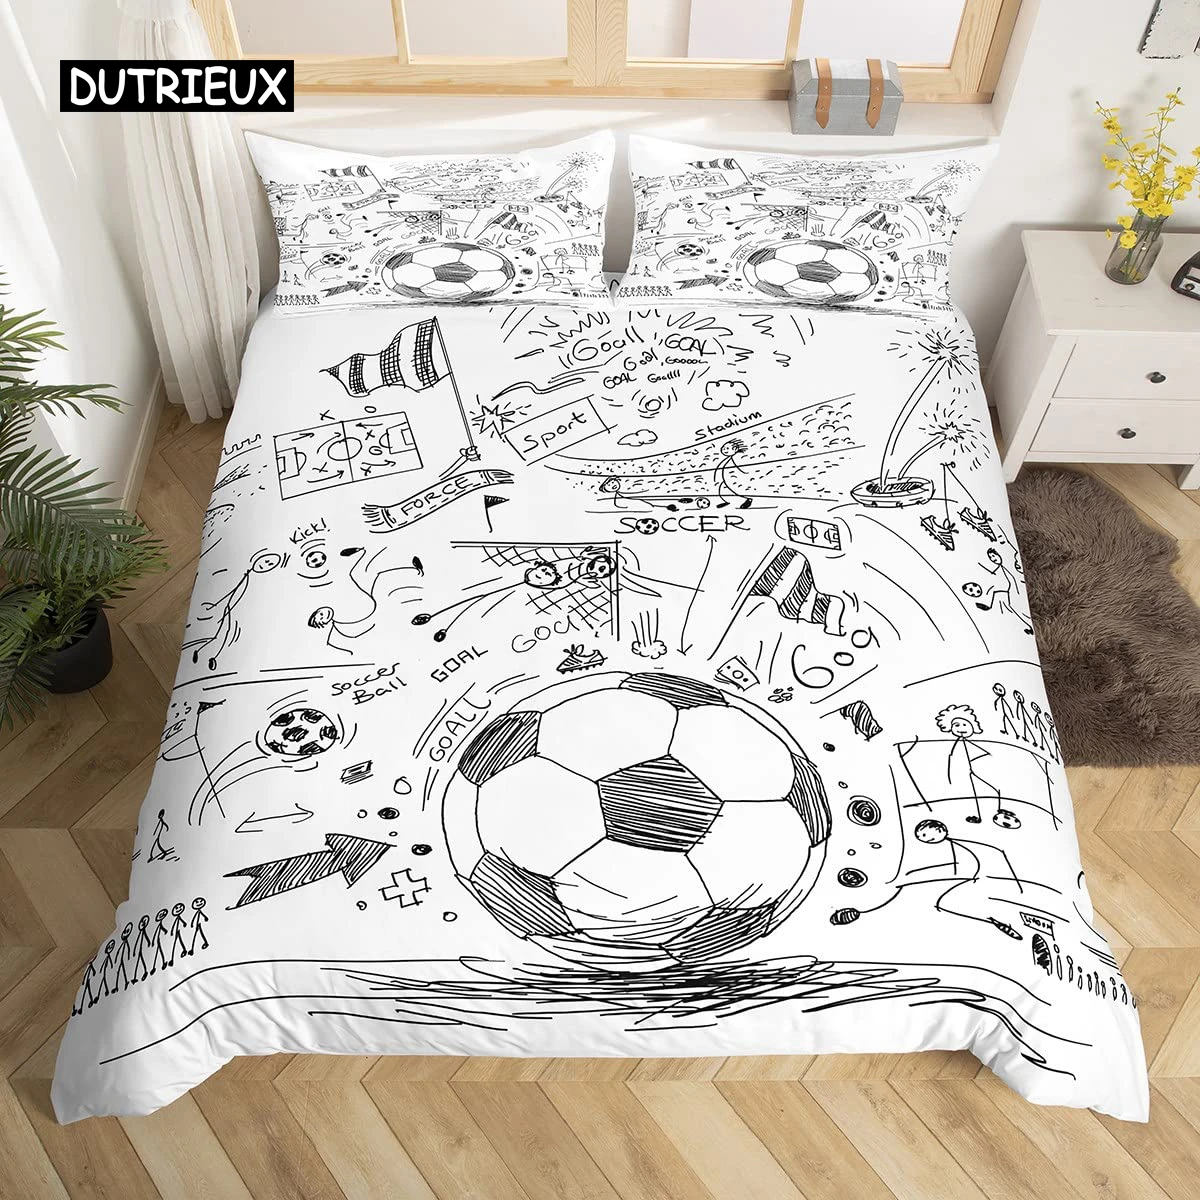 

Football Duvet Cover Set Hand Drawn Sketch Soccer Flag Network Team Sports Bedding Set for Boys Teens Men Twin Comforter Cover